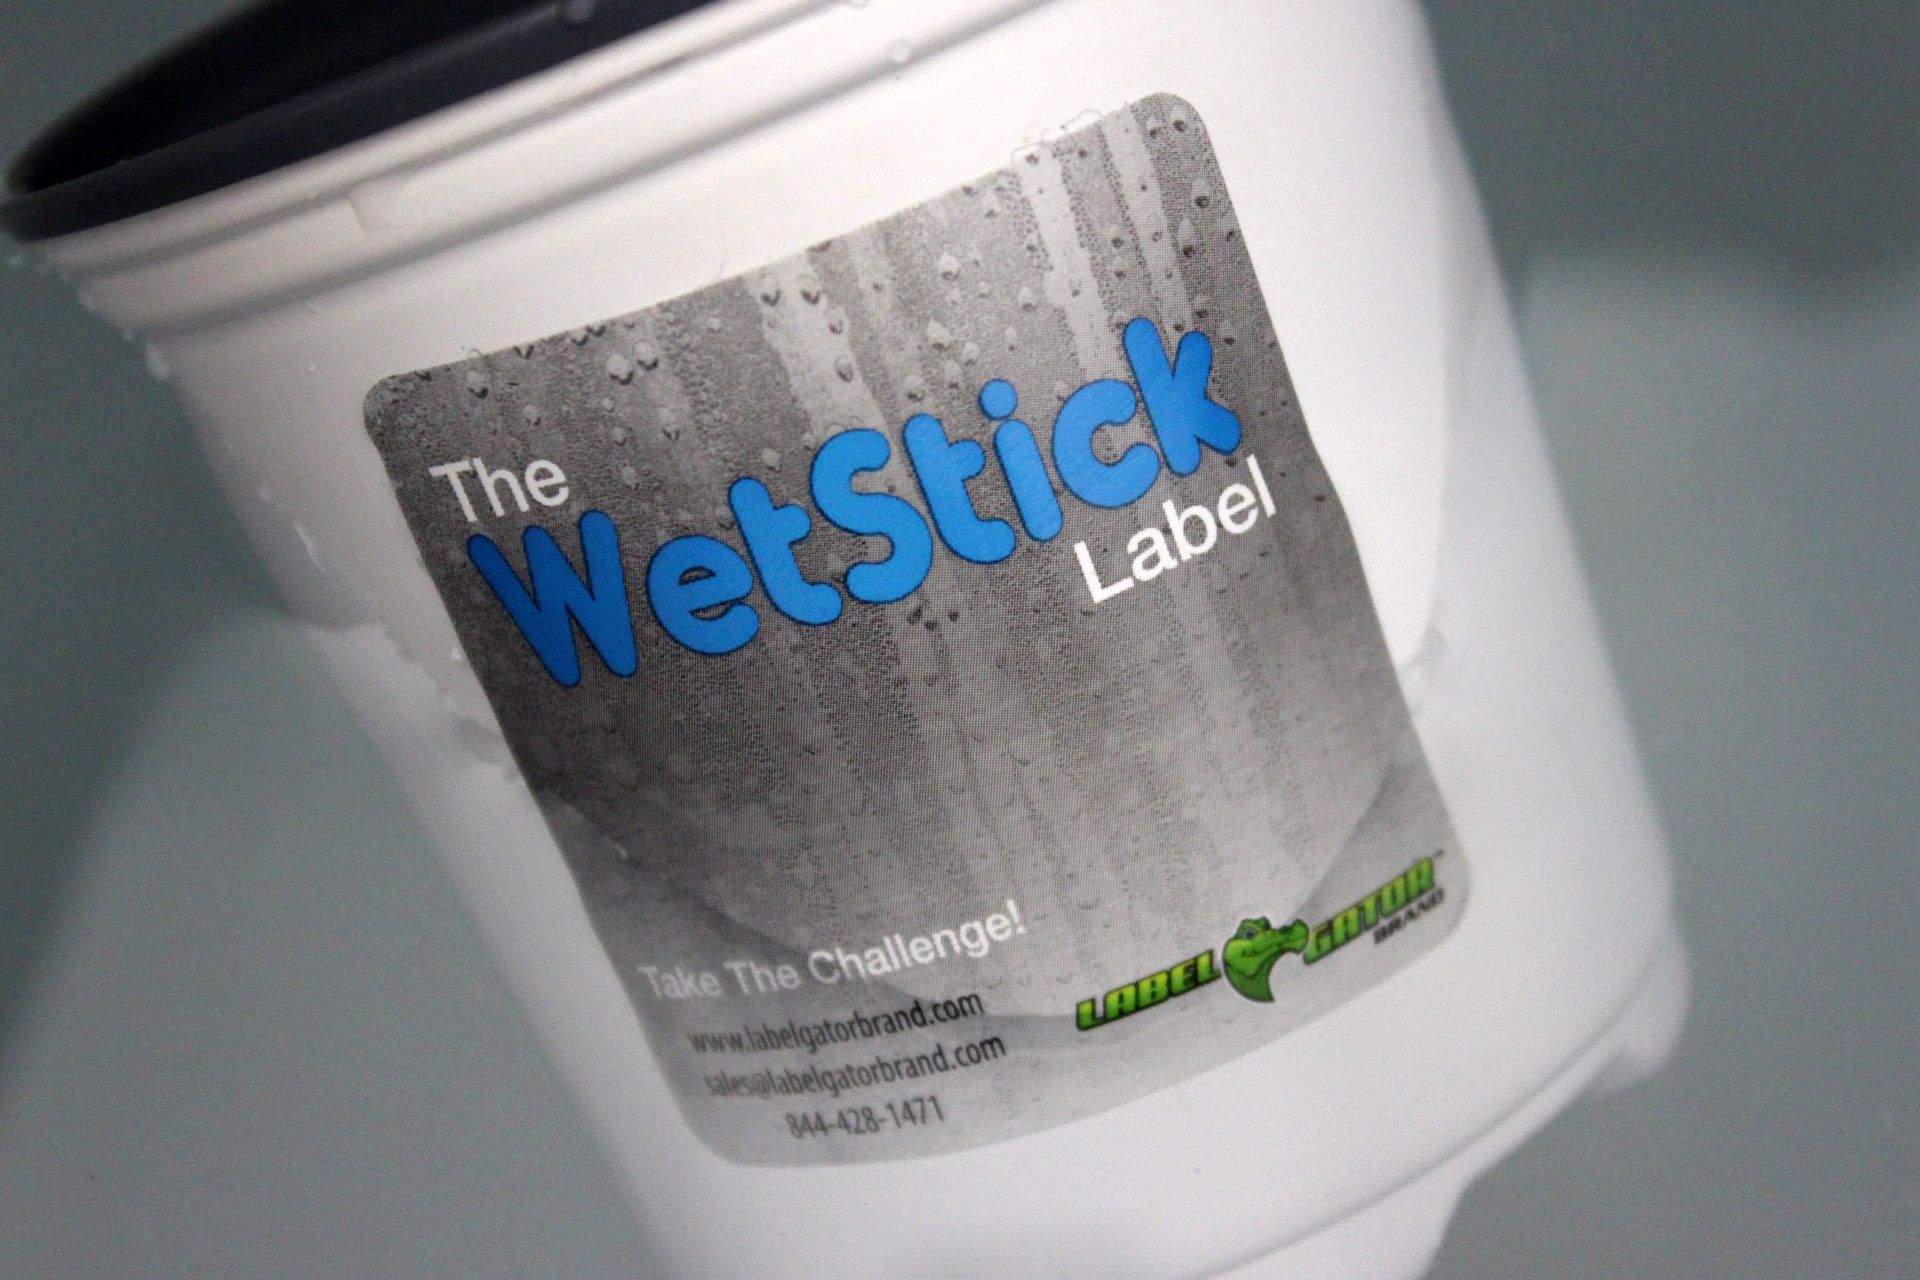 wetstick label - great lakes label - meet label gator video still